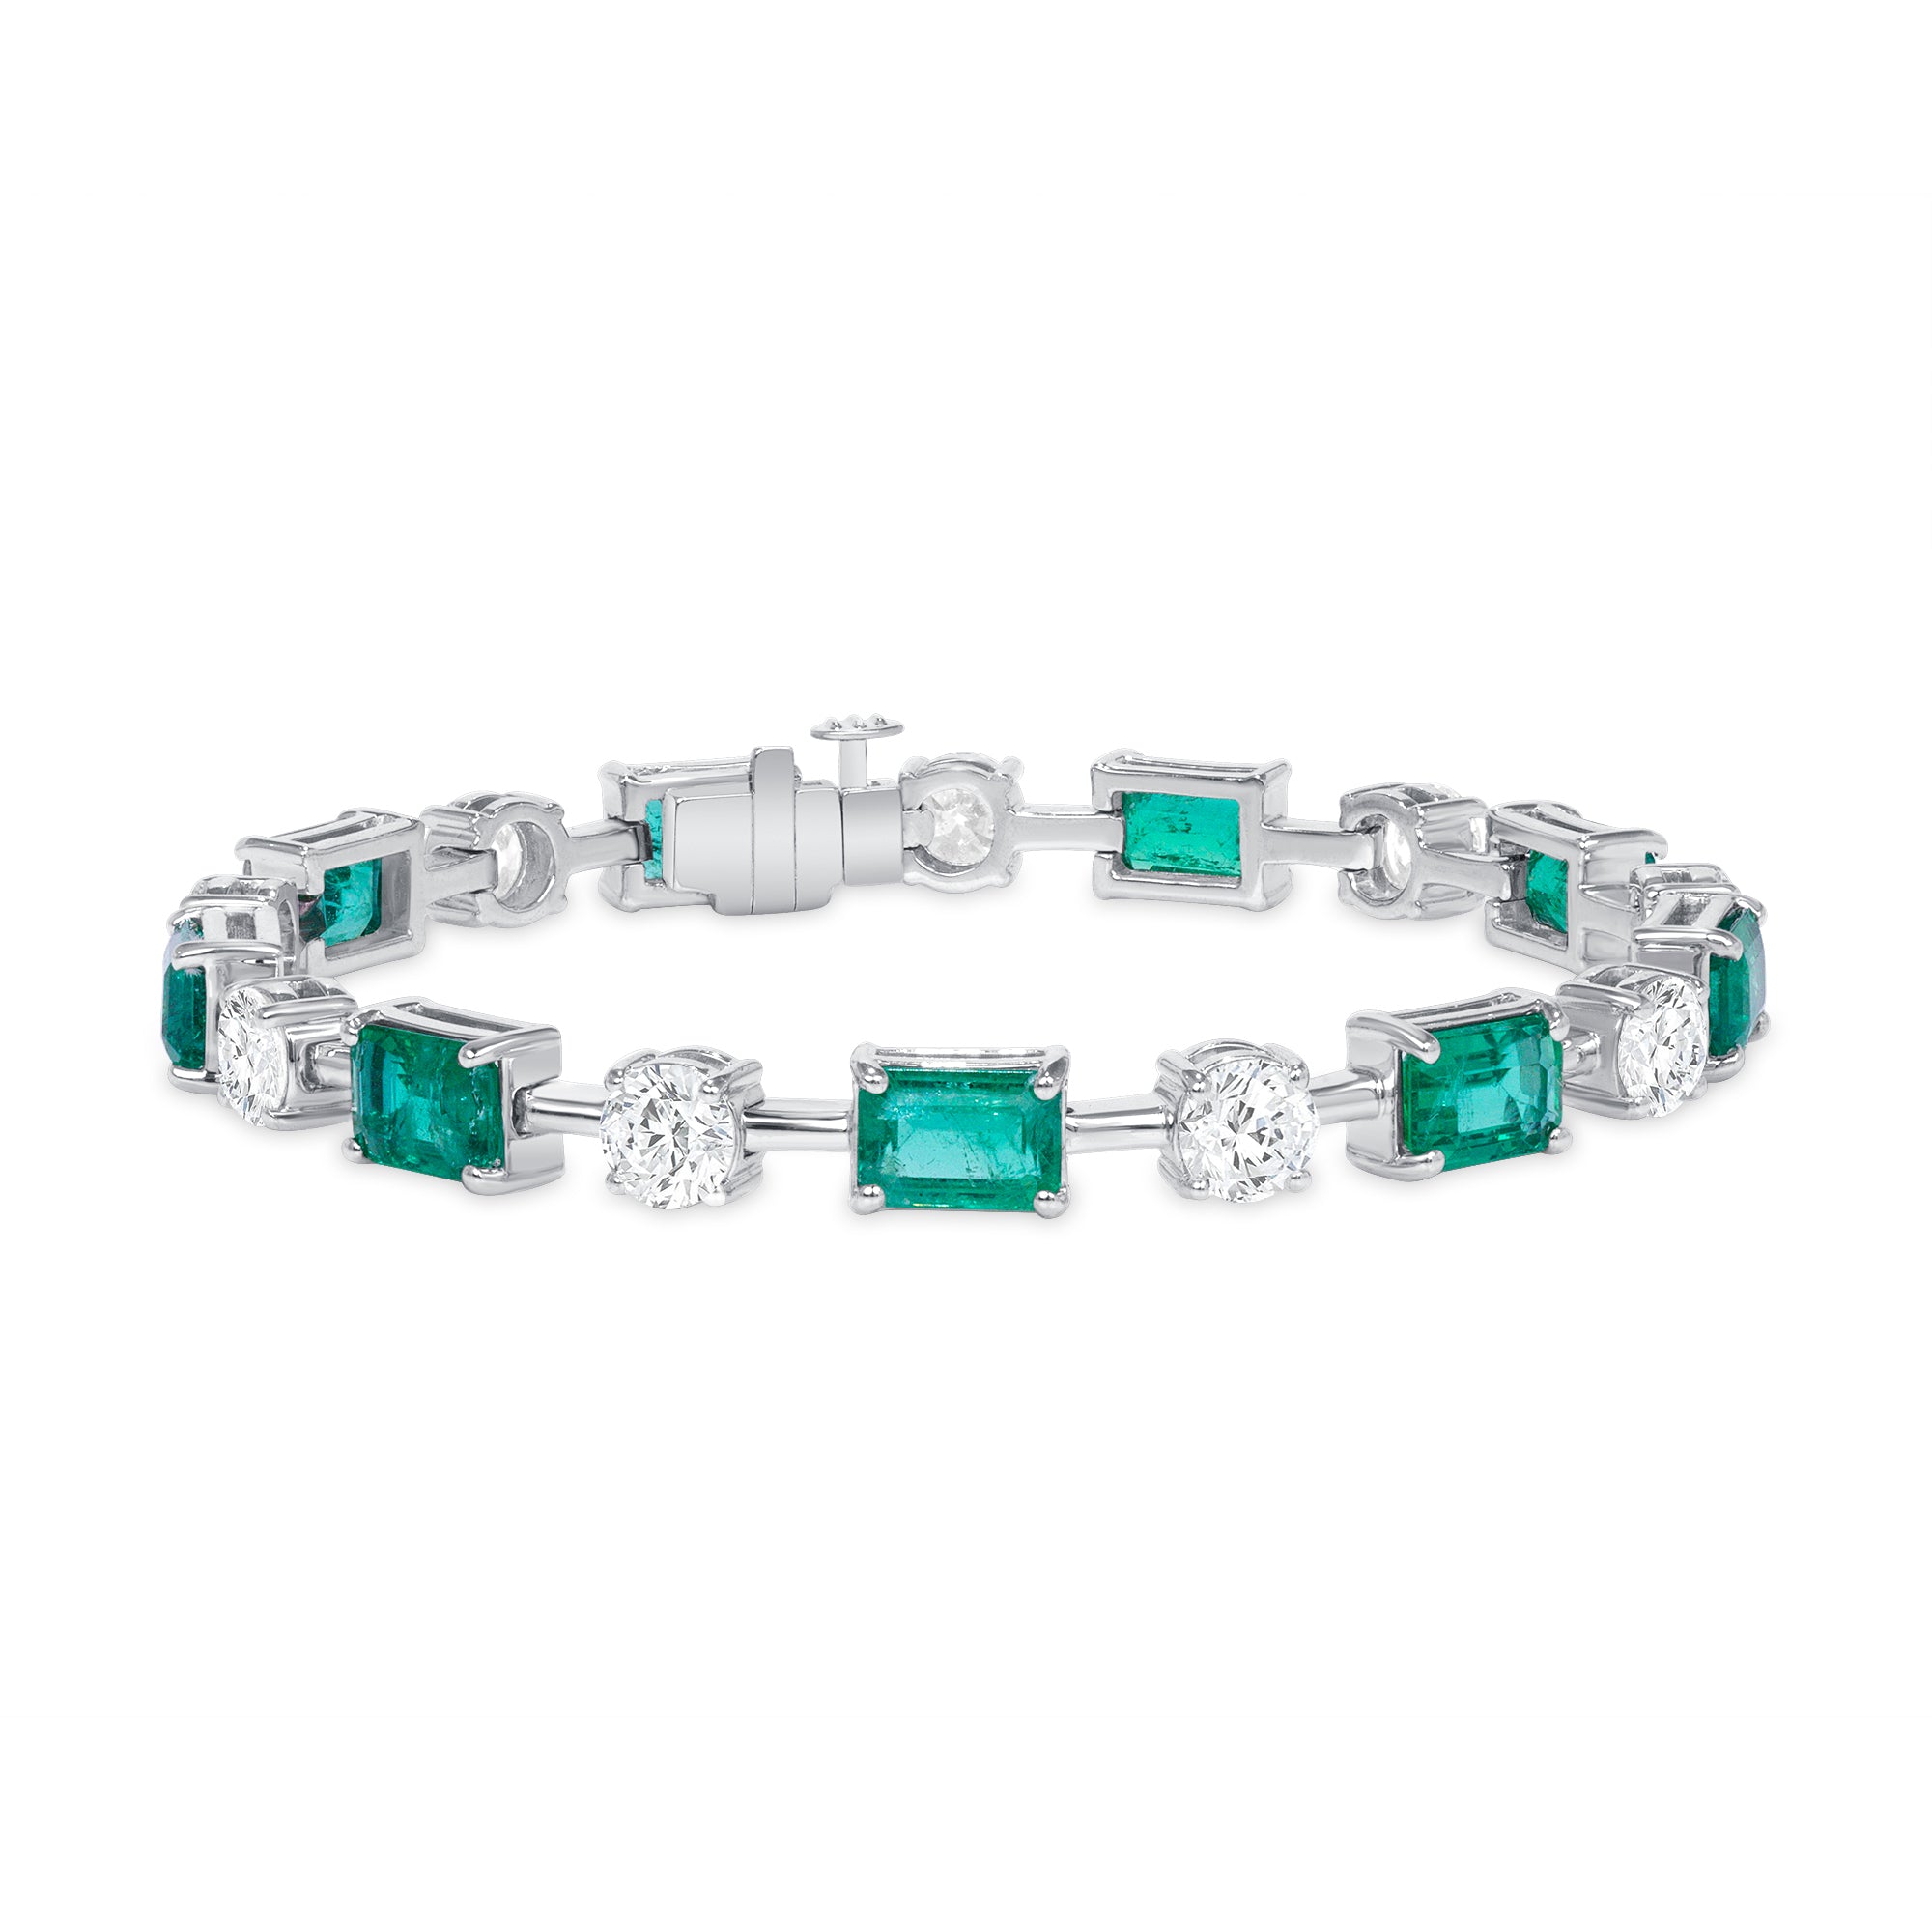 12.69ctw Alternating Emerald Cut Emerald and Round Brilliant Cut Diamond Tennis Bracelet in 18K White Gold